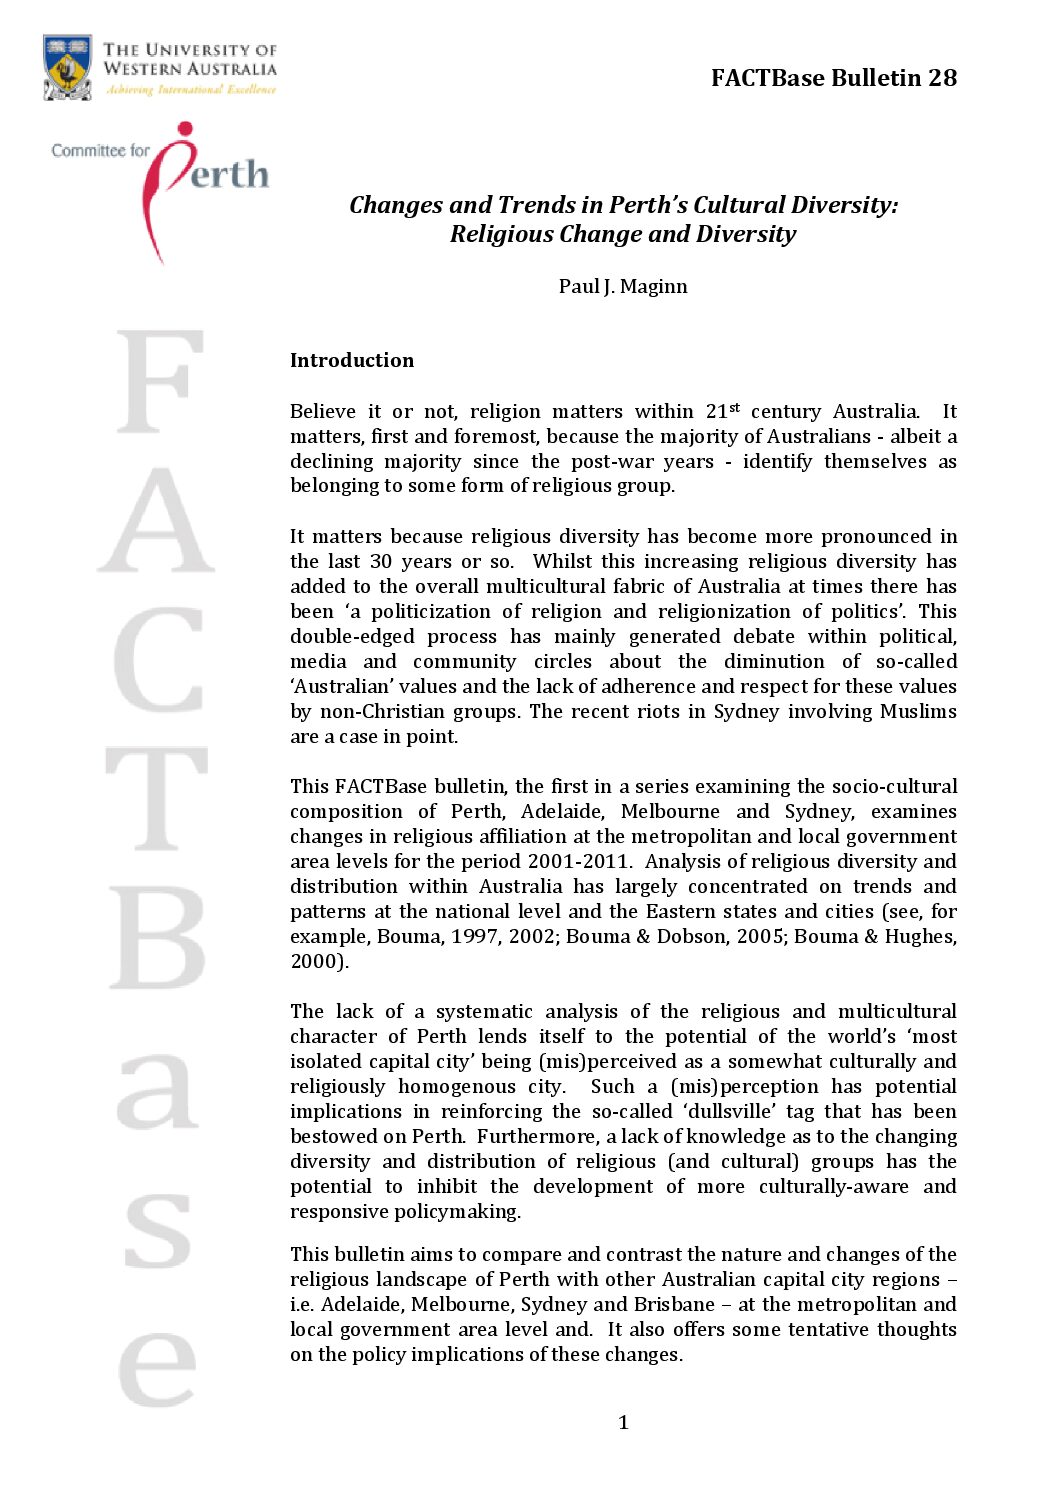 FACTBase Bulletin 28 - January 2013